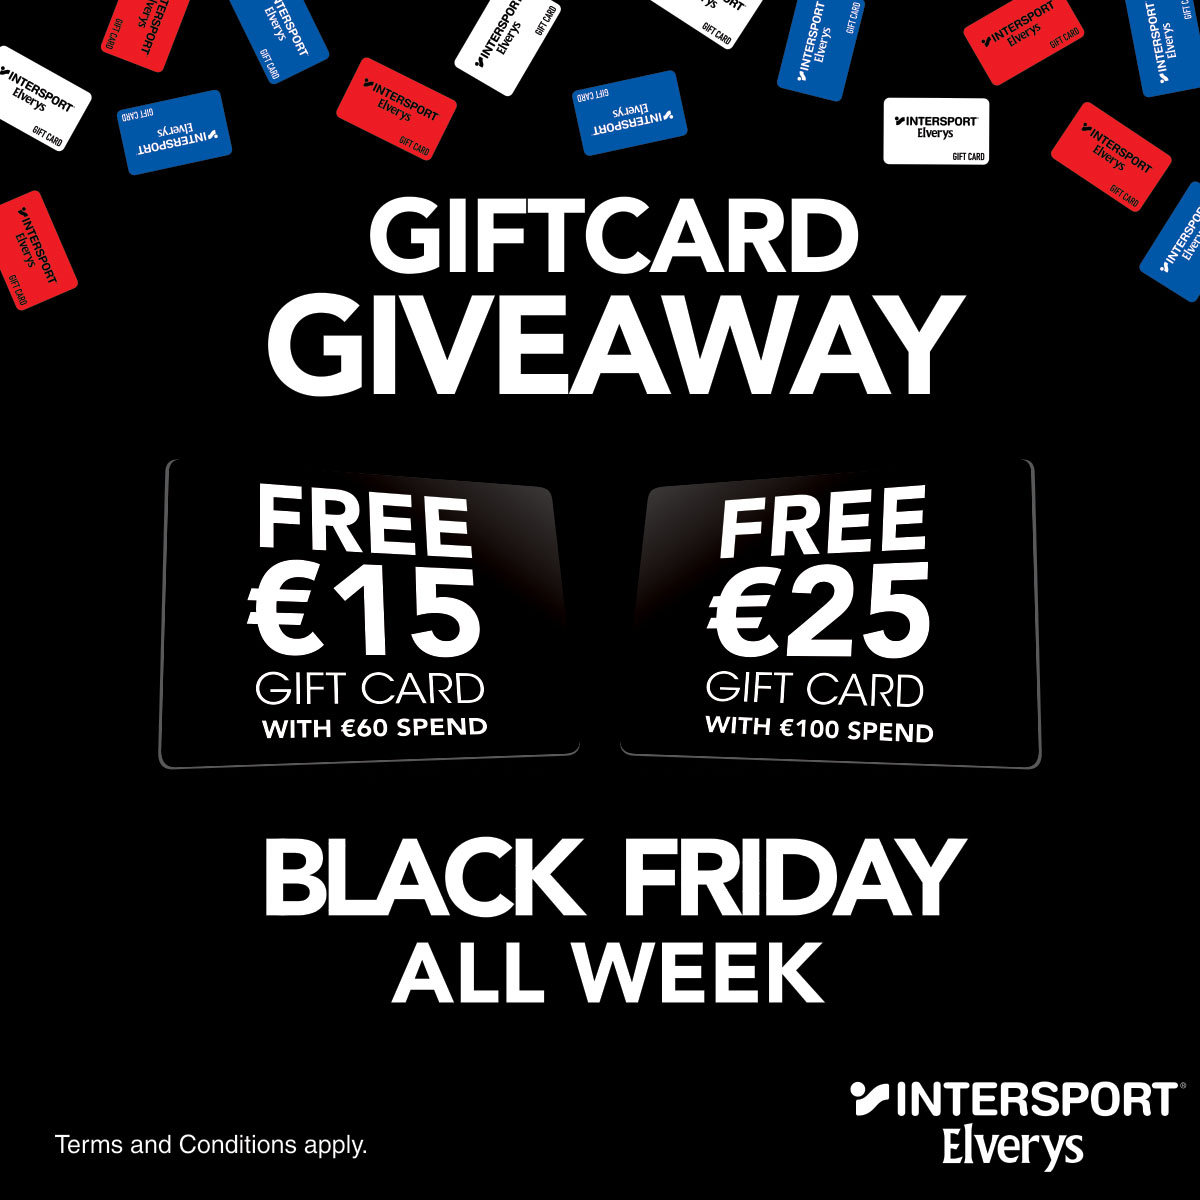 Black Friday Deals from Intersport Elverys